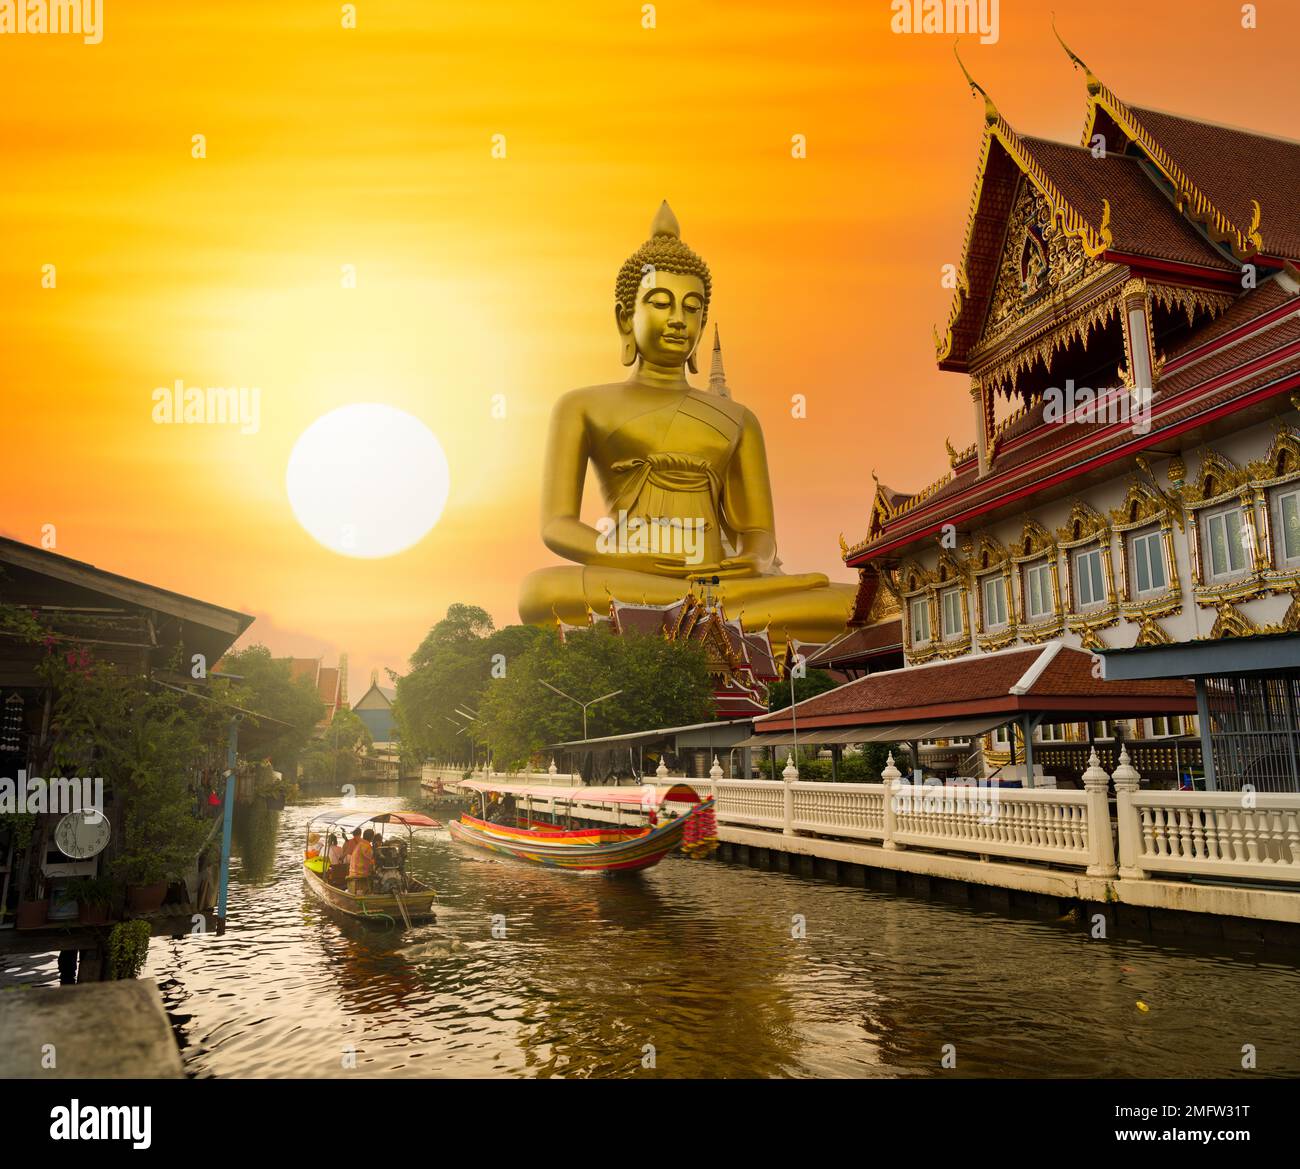 Big Buddha (Wat Paknam) at sunset. Chao Phraya river canal cruise. Tourists traveling by traditional boats. Thailand's most important travel destinati Stock Photo